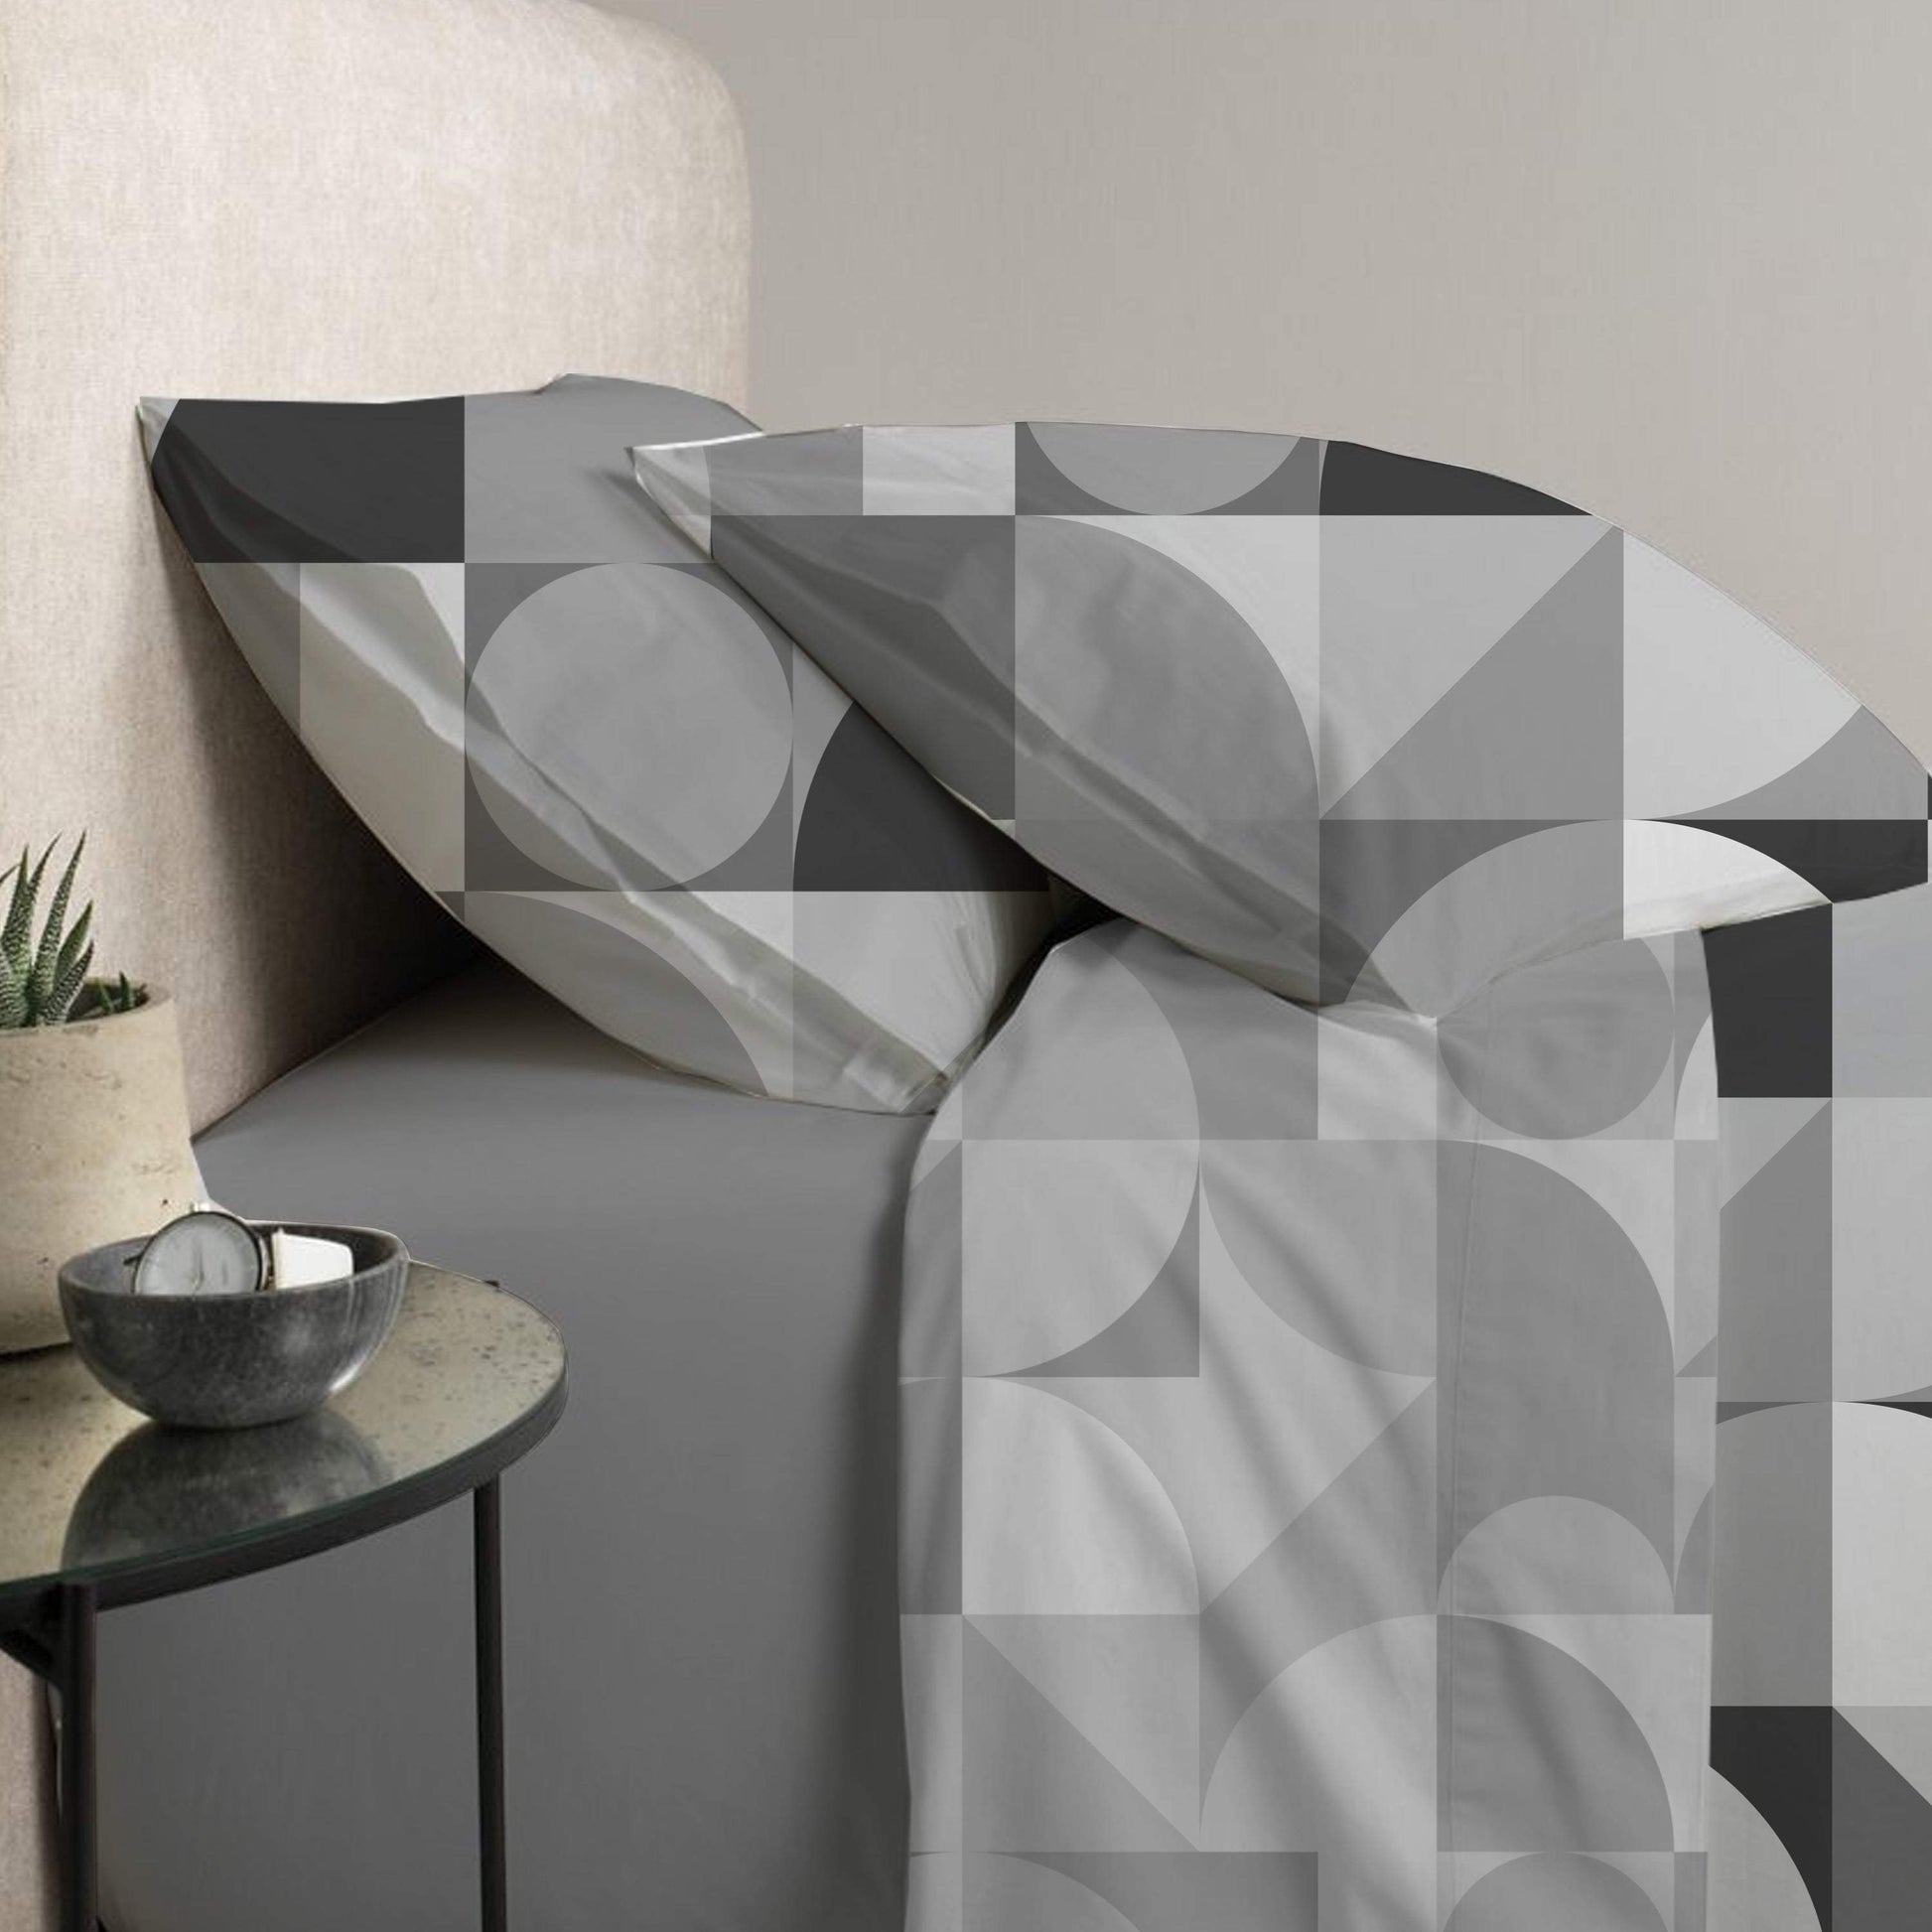 4-Piece Luxury Cotton Comforter Set Queen/King Size Bauhaus Print Grey